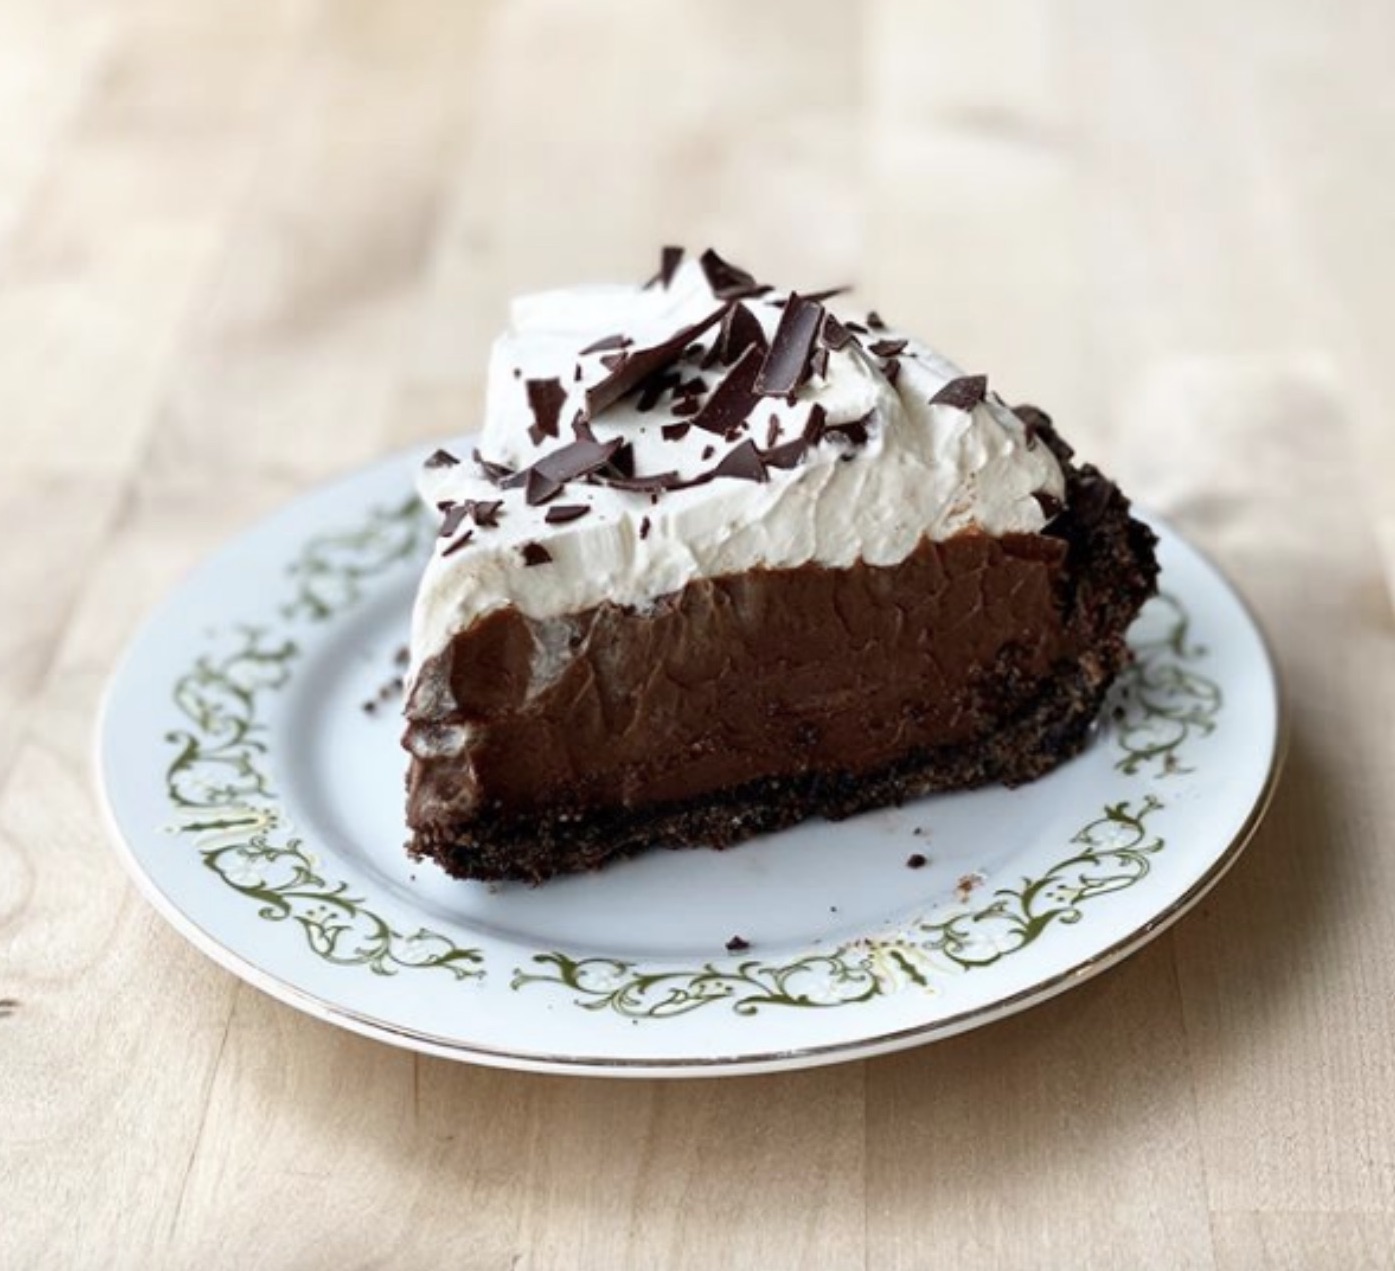 A chocolate cream pie